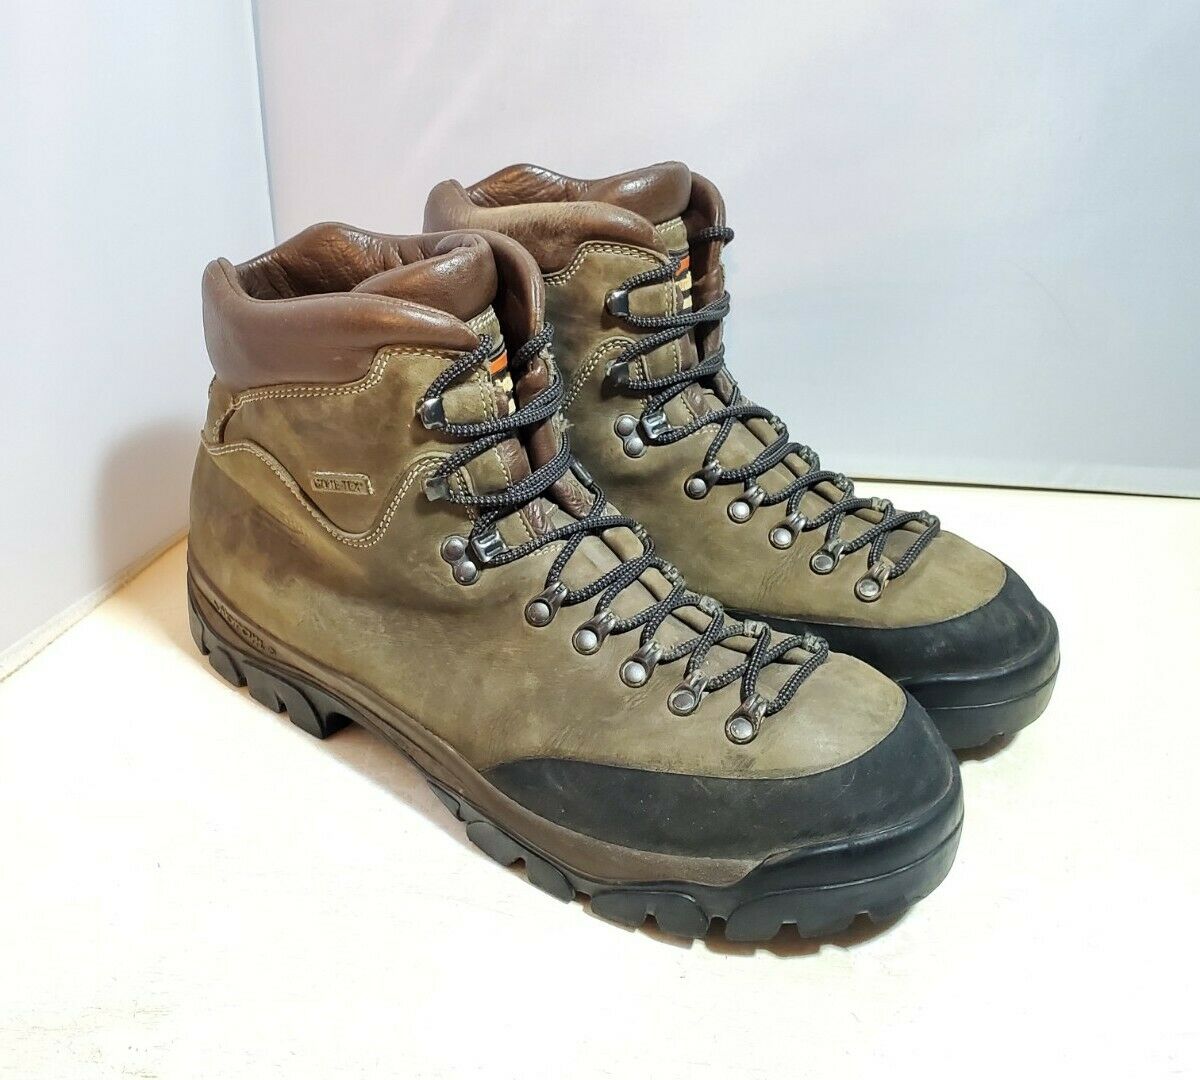 Zamberlan GoreTex GTX Leather Hiking Boots Mountaineering Trekking - Men's Sz 14